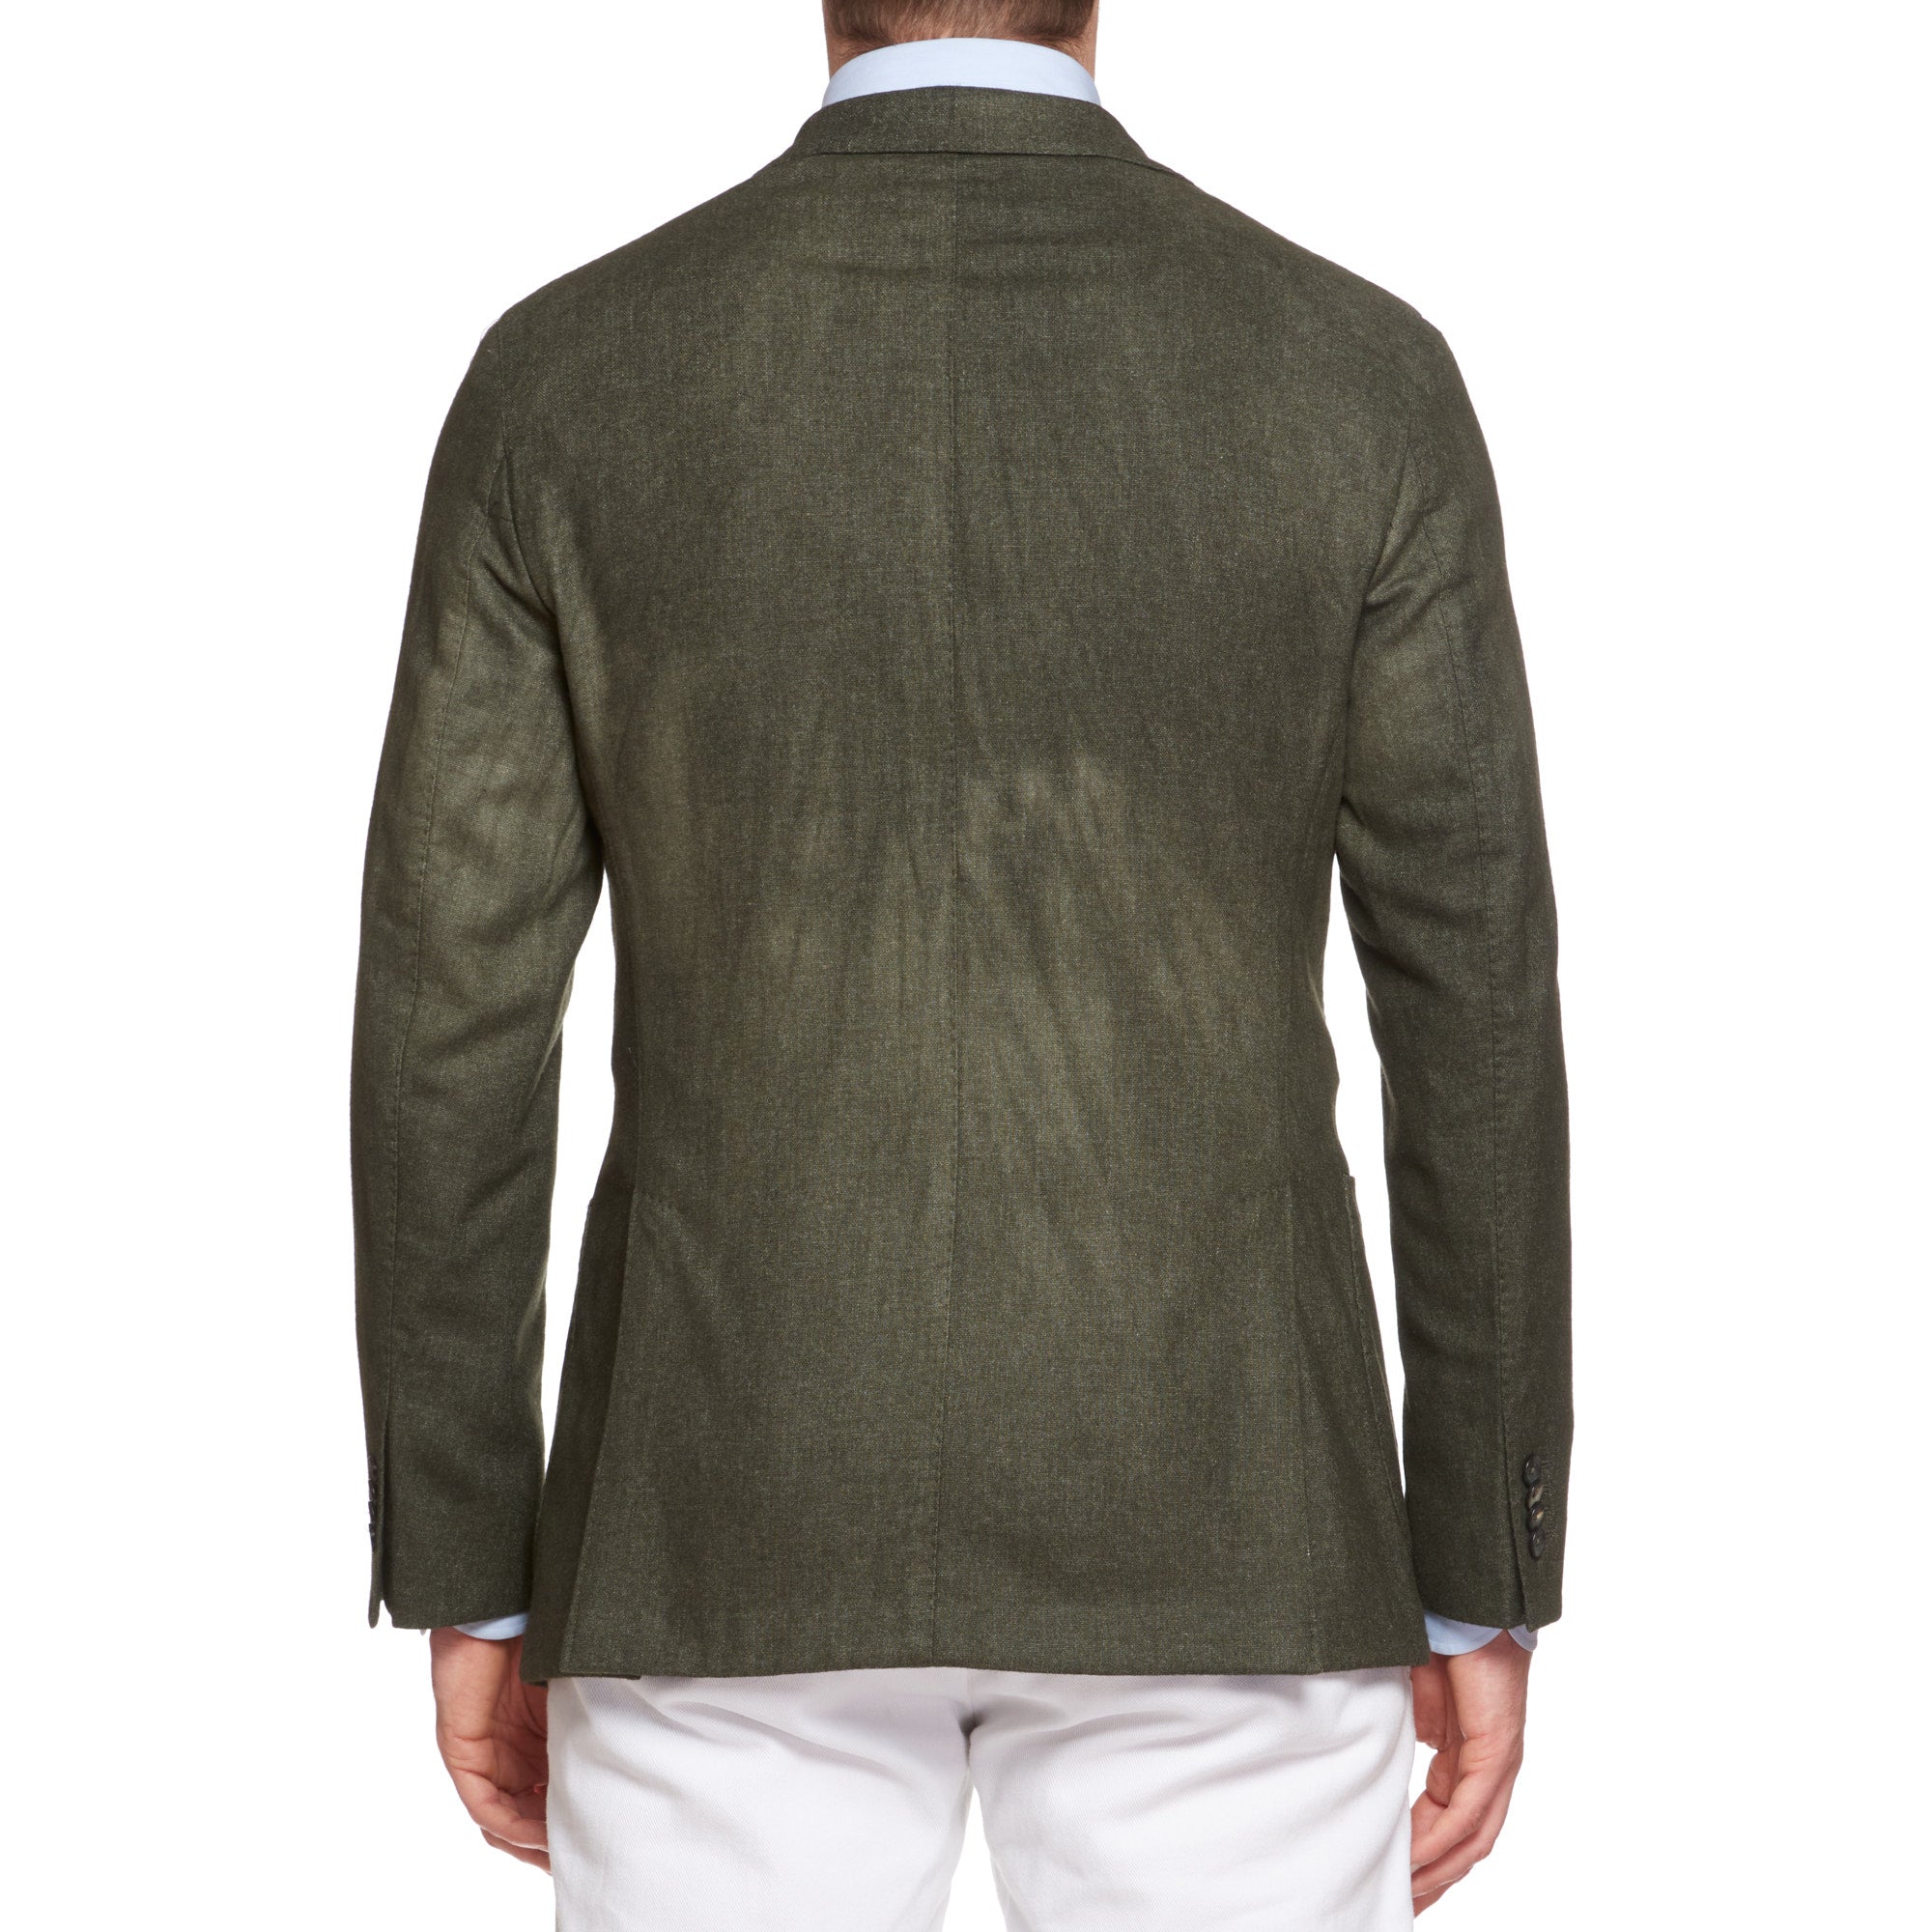 BOGLIOLI Milano "K.Jacket" Green Wool Unlined Sport Coat Jacket EU 46 NEW US 36